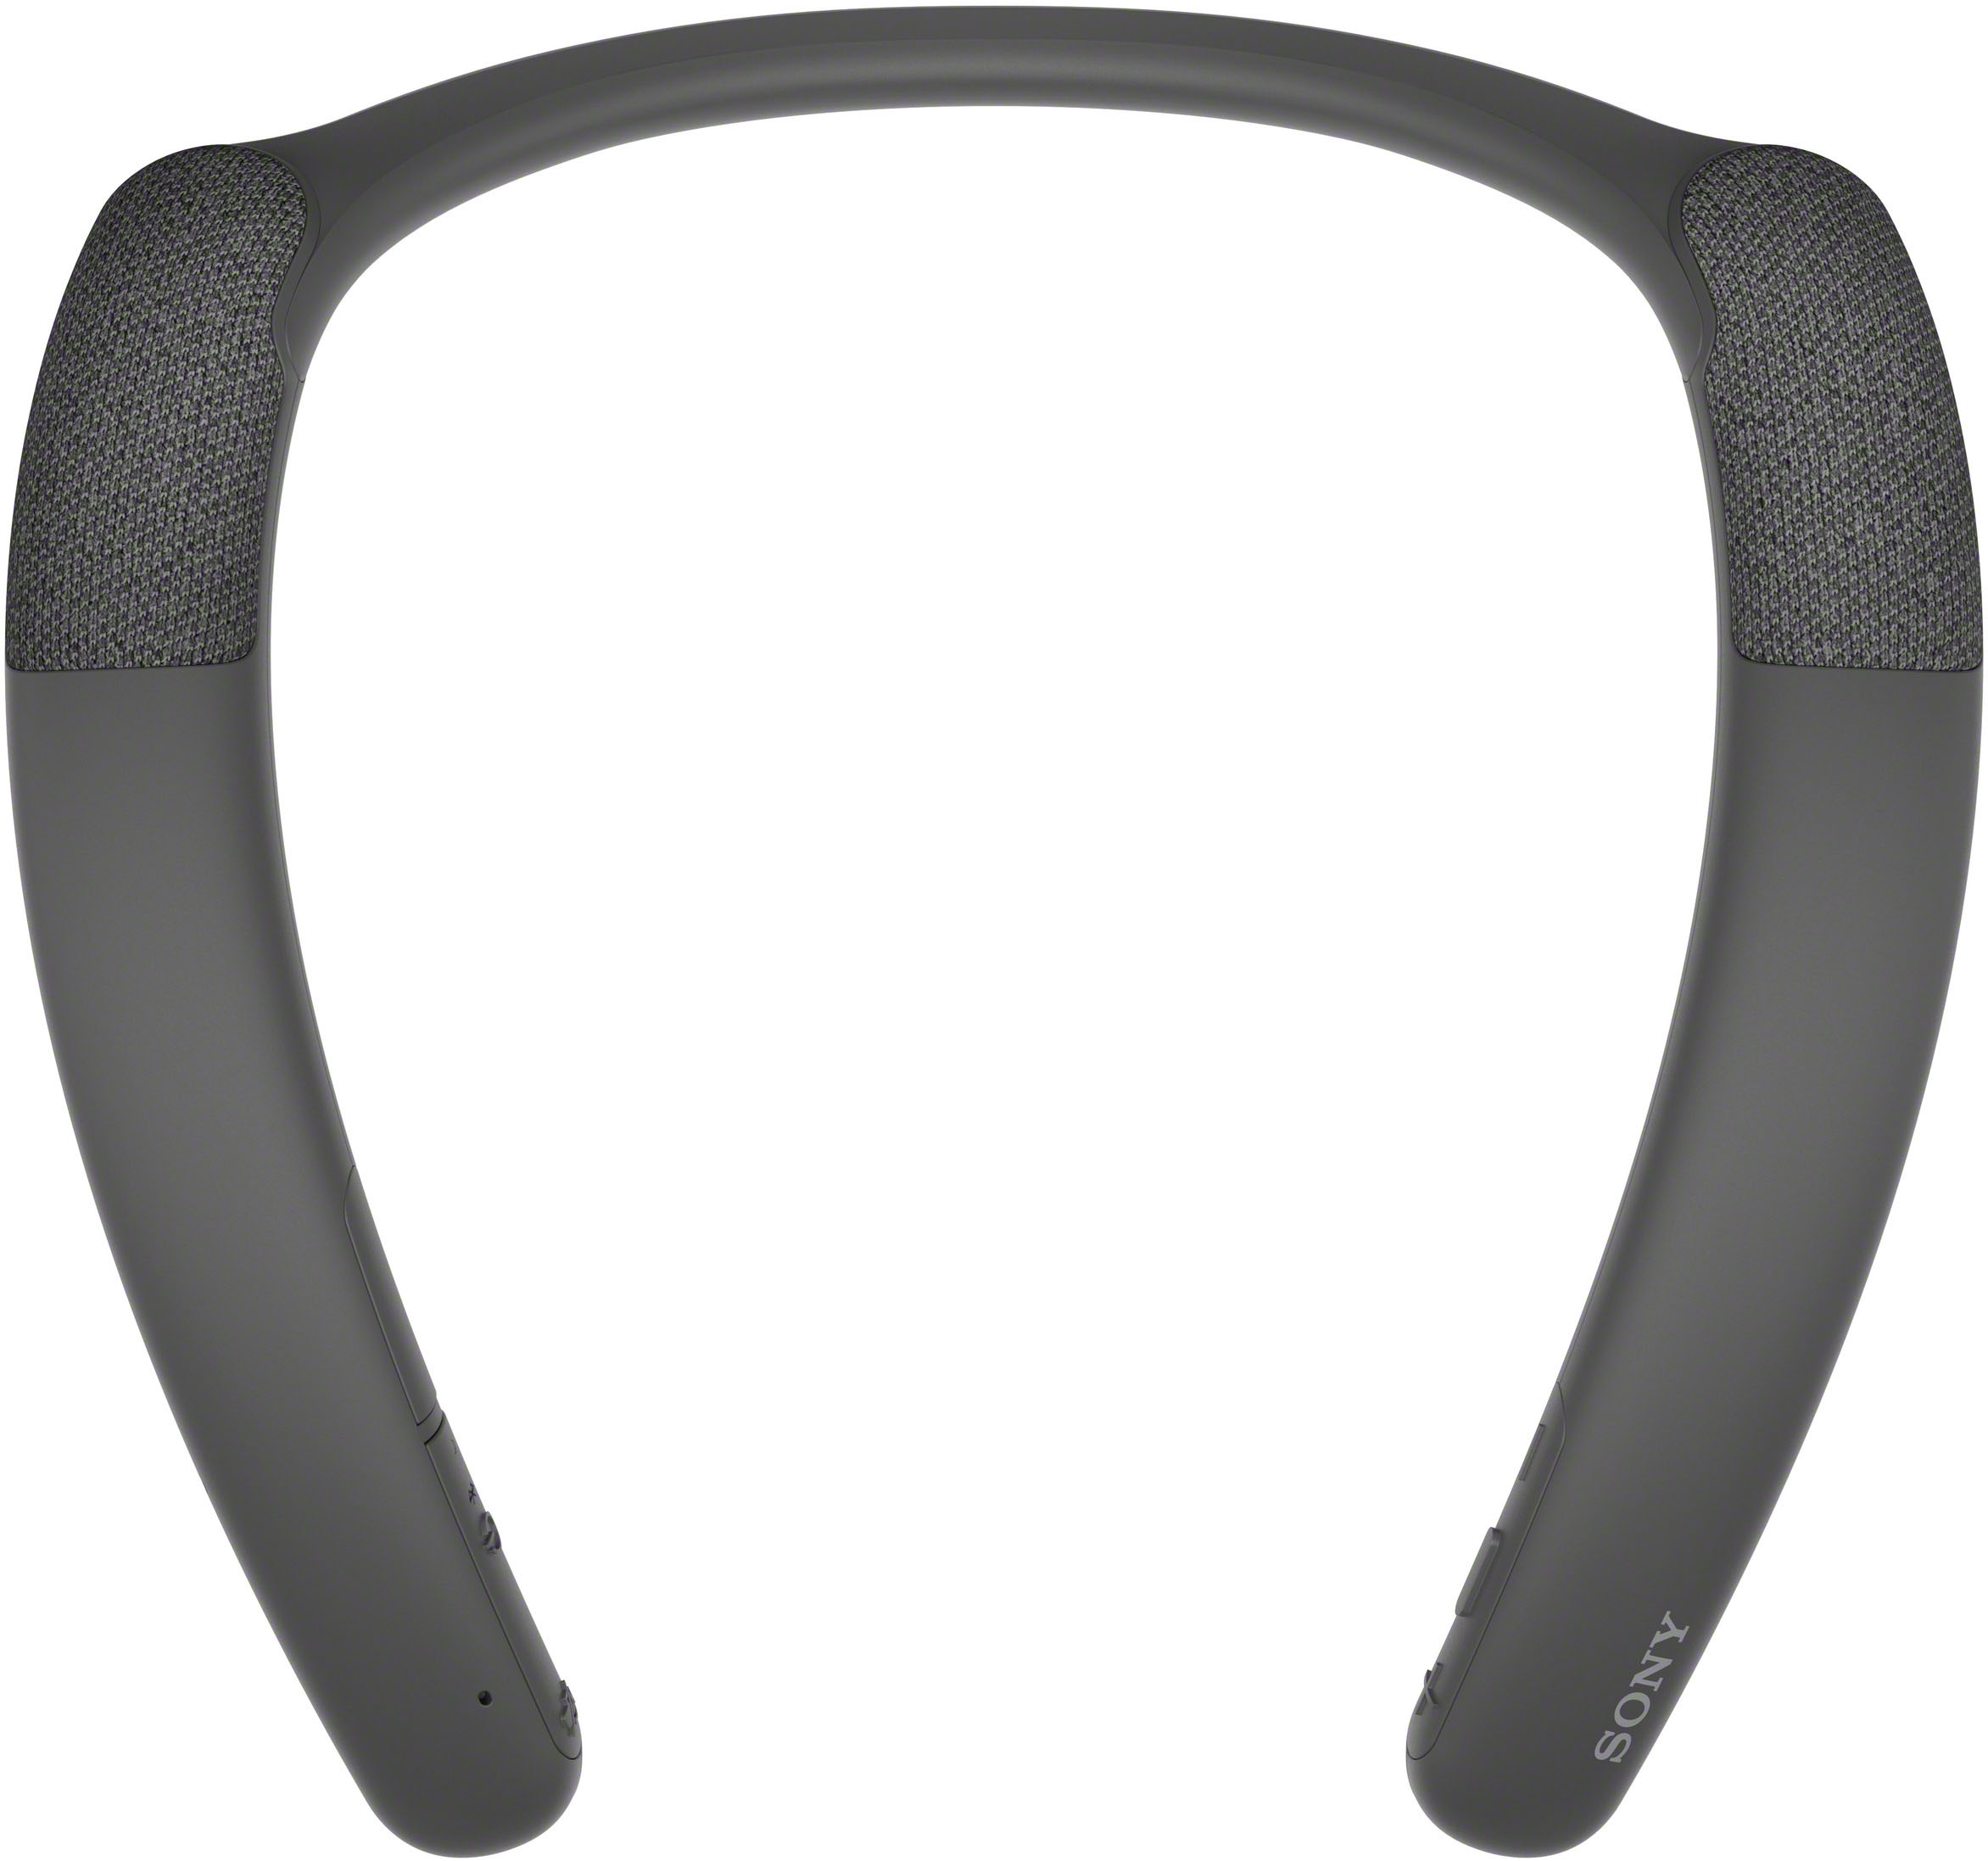 Sony Bluetooth Wireless Neckband Speaker Charcoal Gray SRSNB10/H - Best Buy